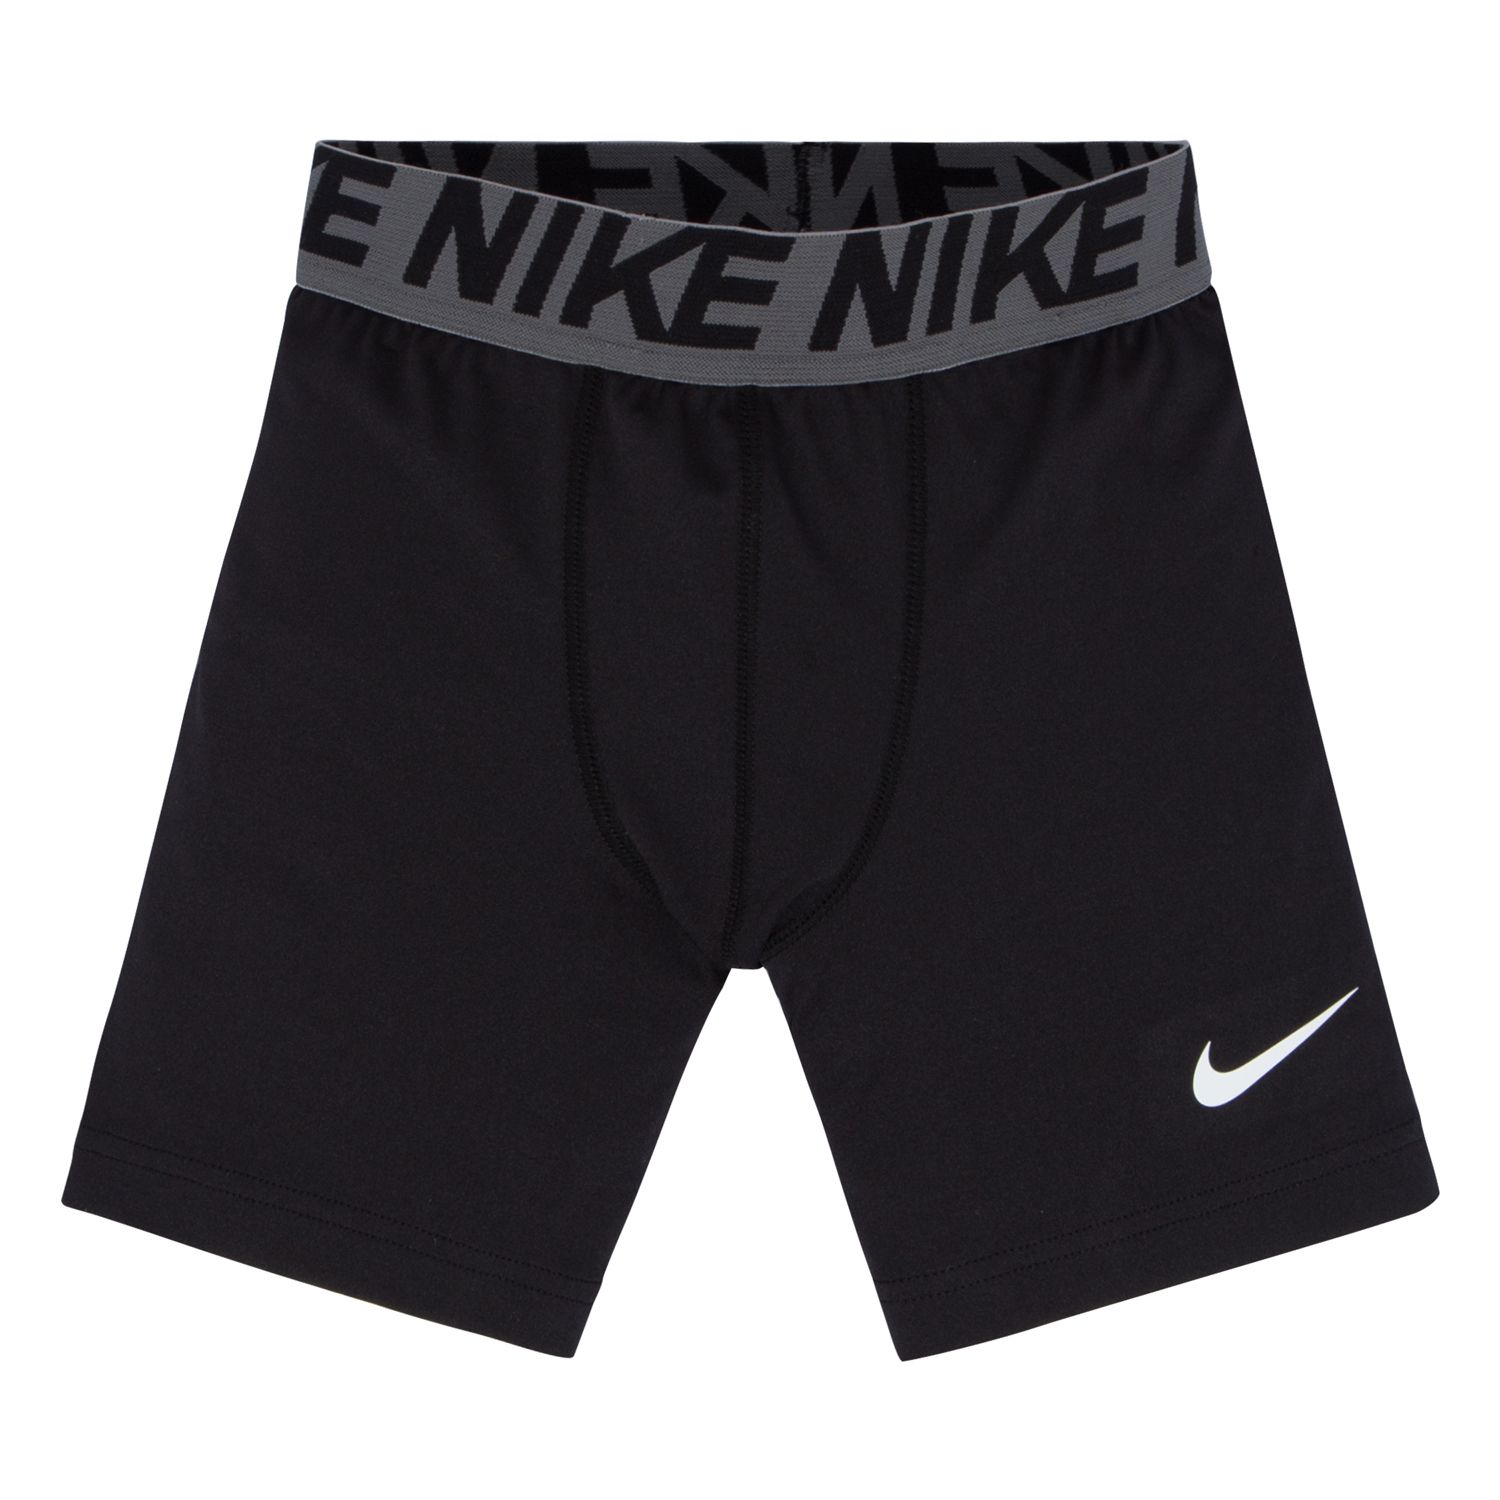 Nike Dri-FIT Base Layer Compression Shorts